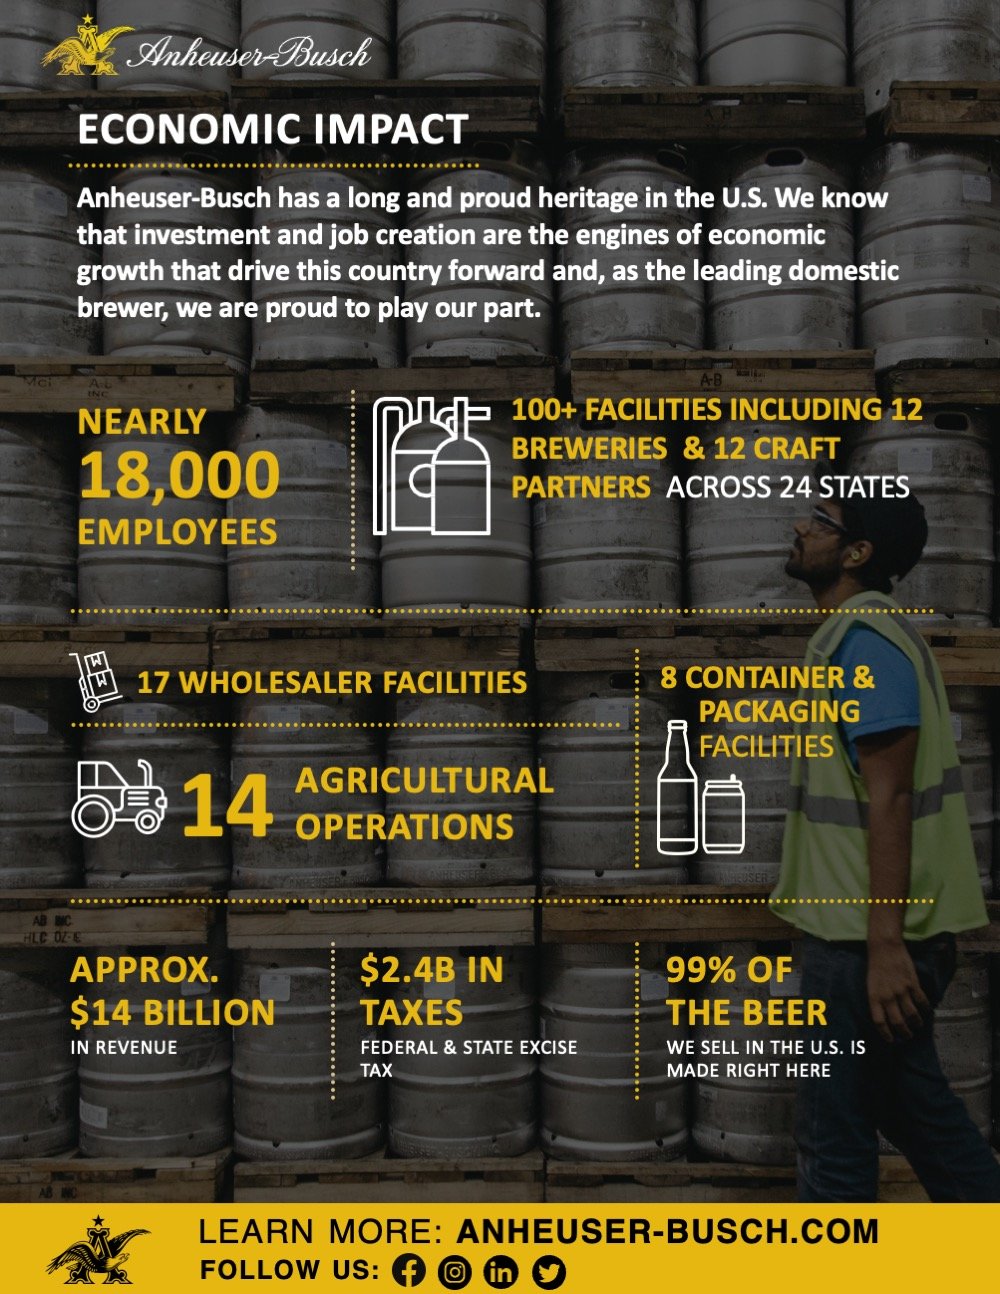 Statistics on Anheuser-Busch's economic impact